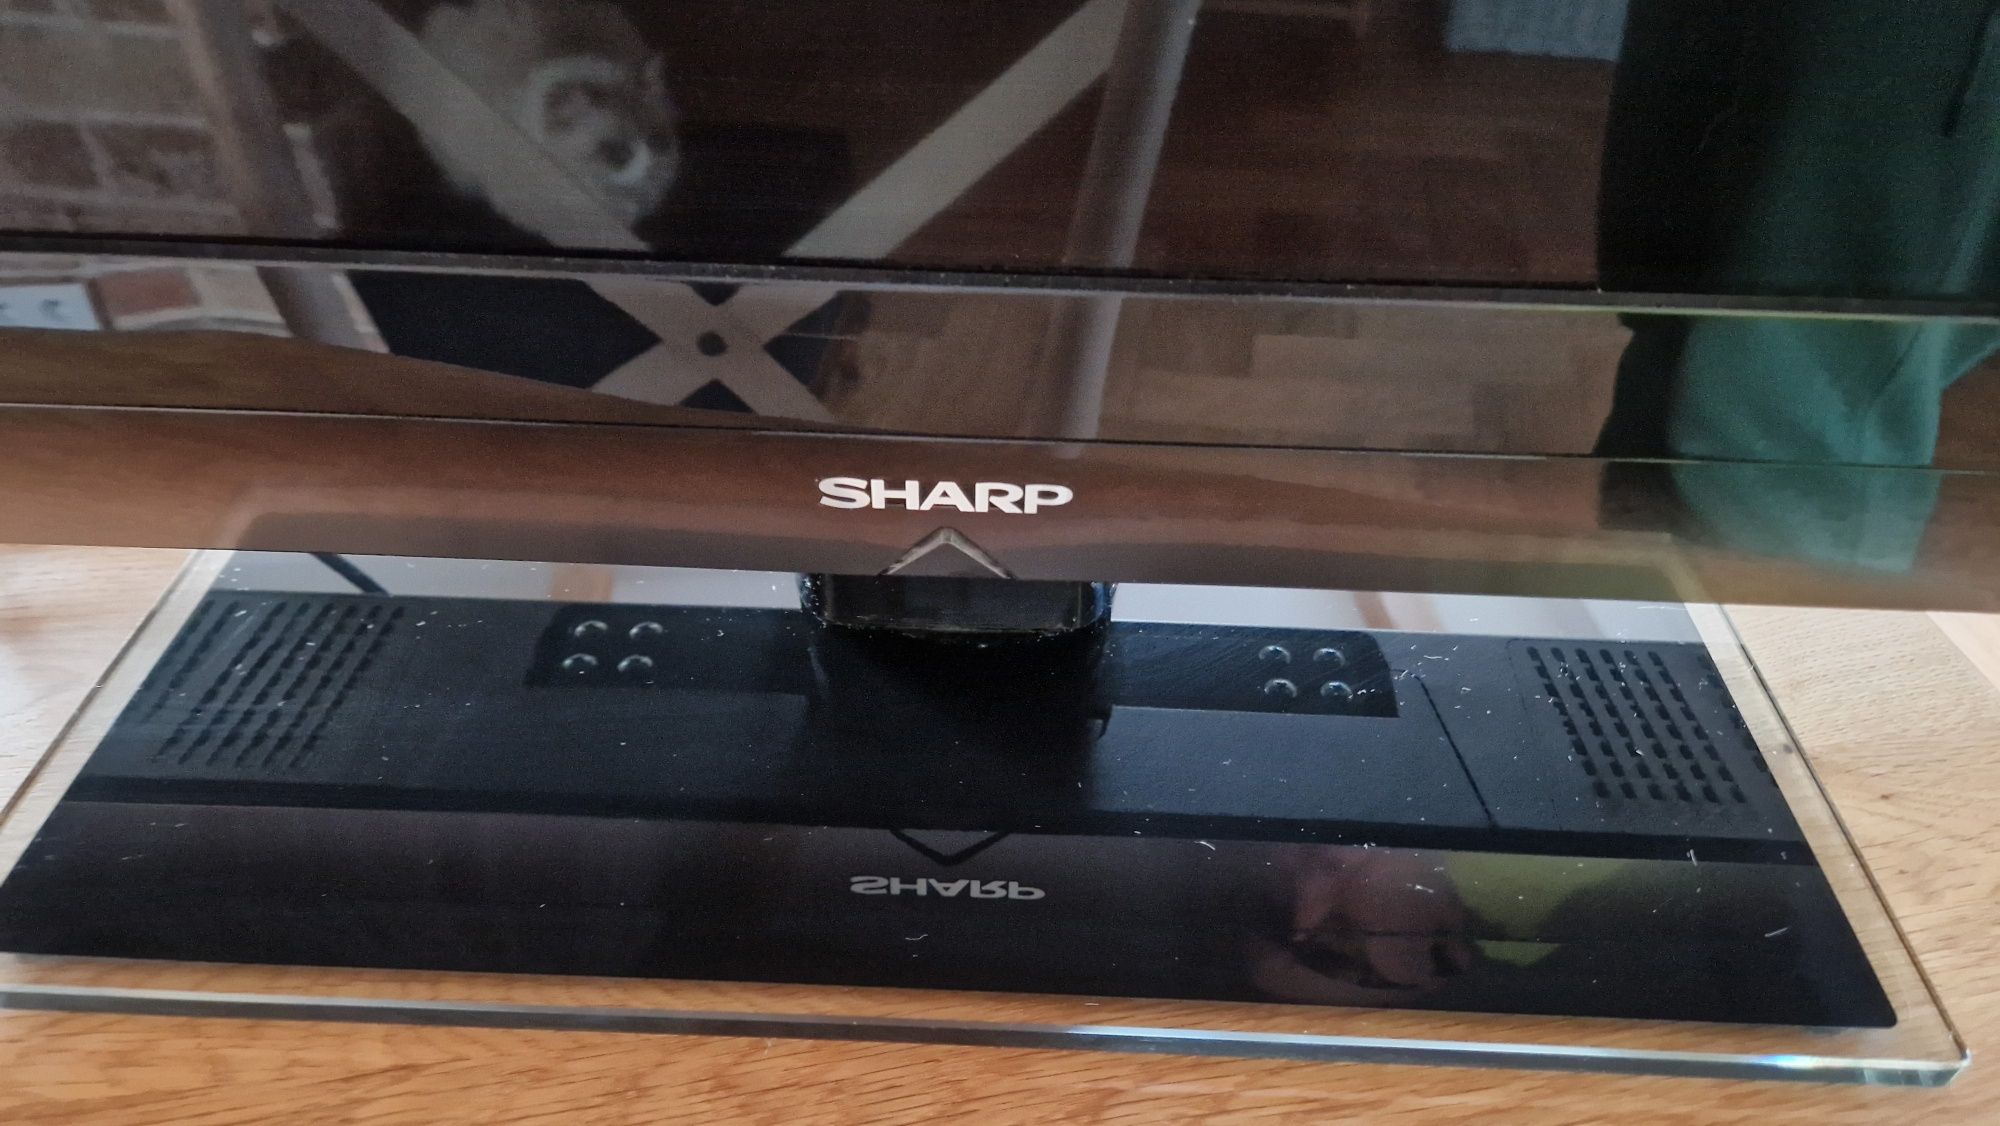 SHarp Aquos TV LCD LC-32LU700E 32"